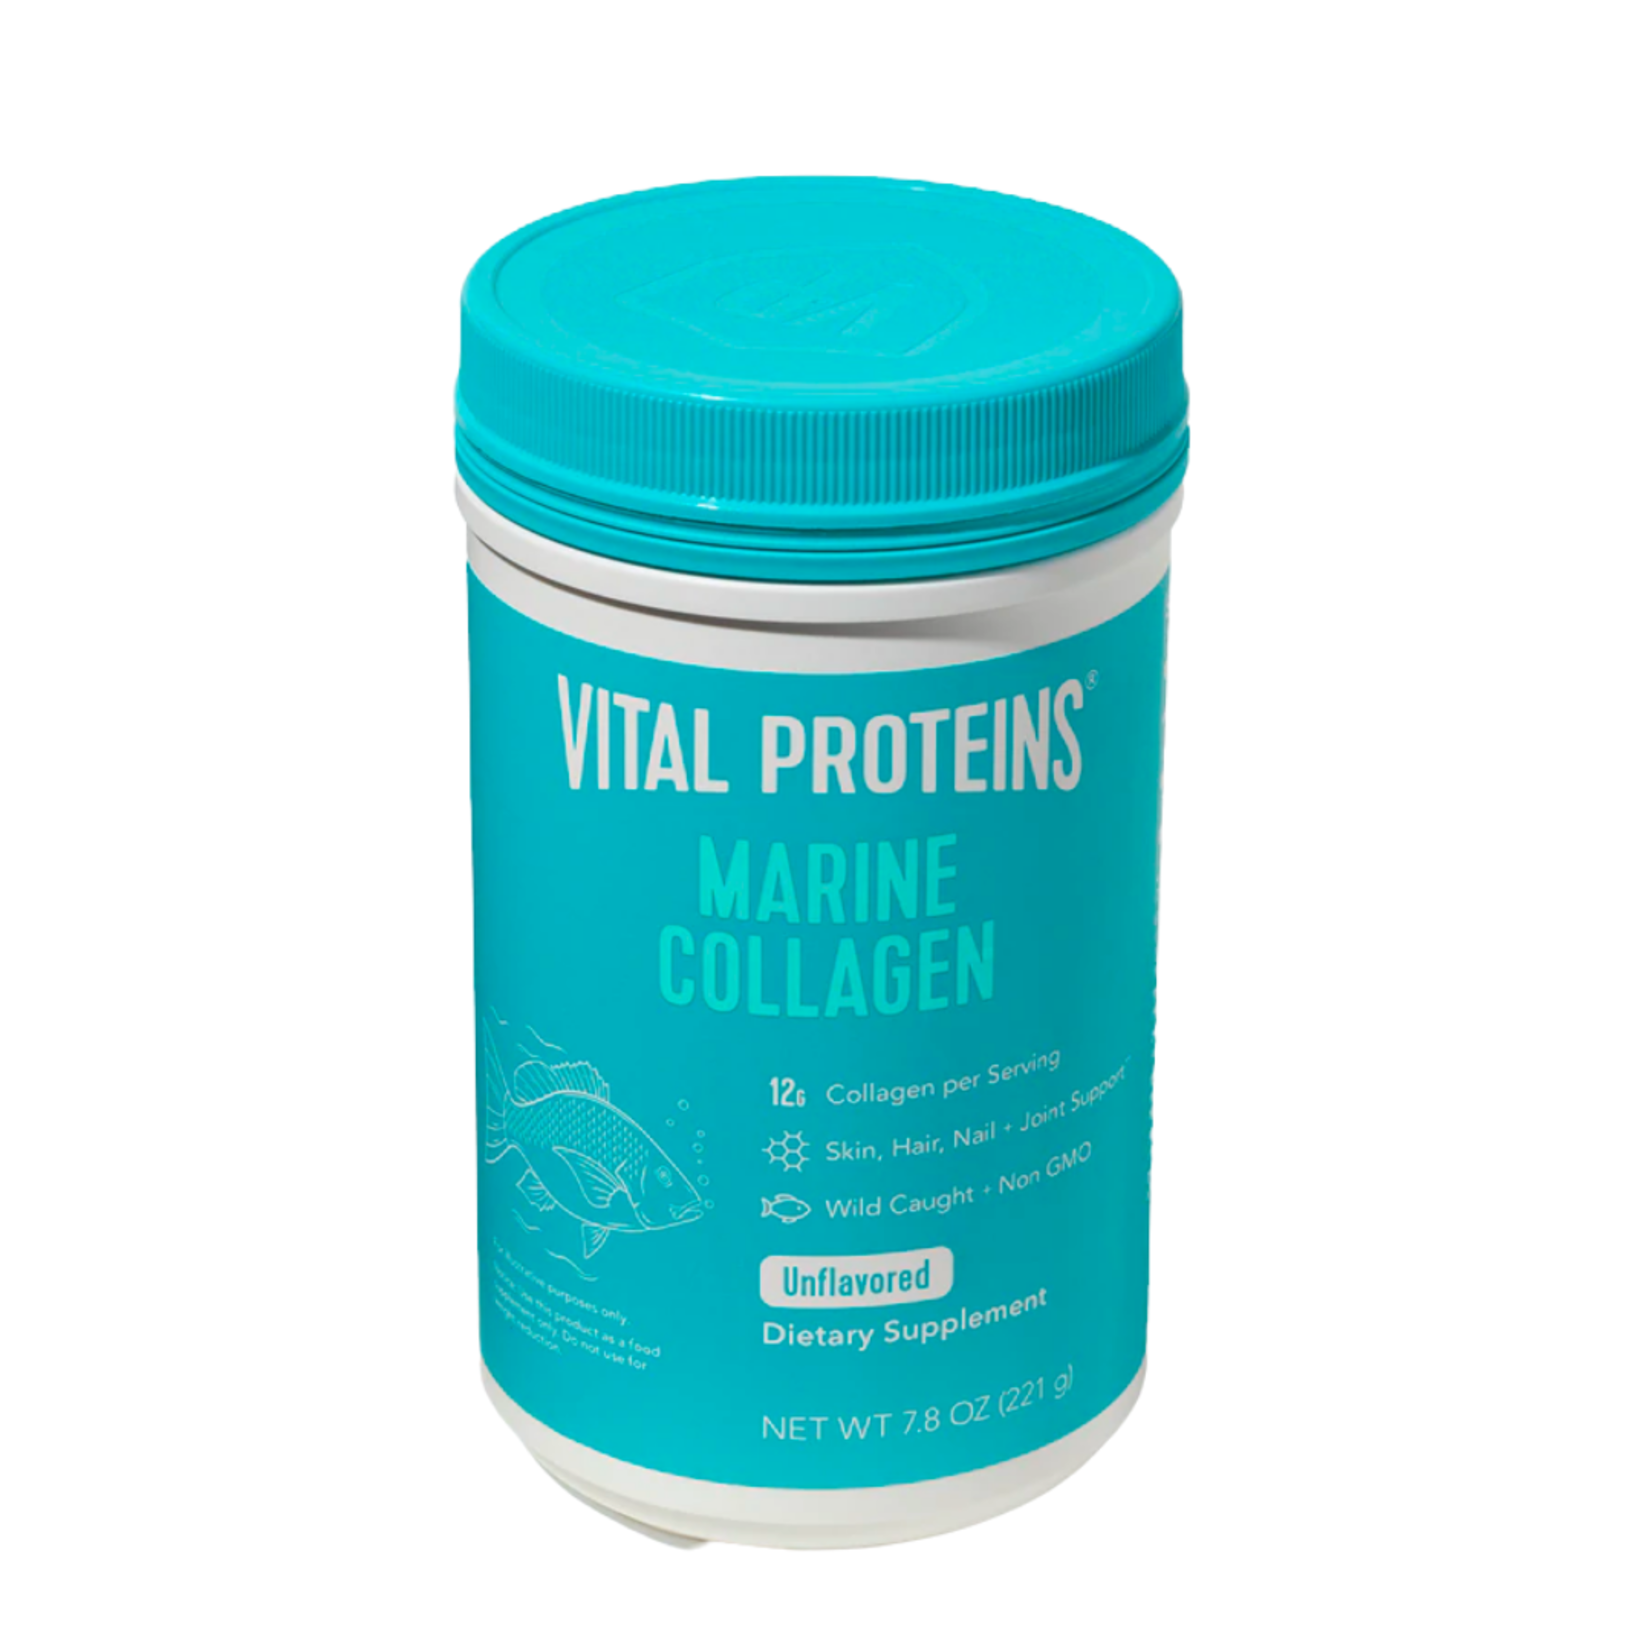 Vital Proteins Vital Proteins Marine Collagen Peptides